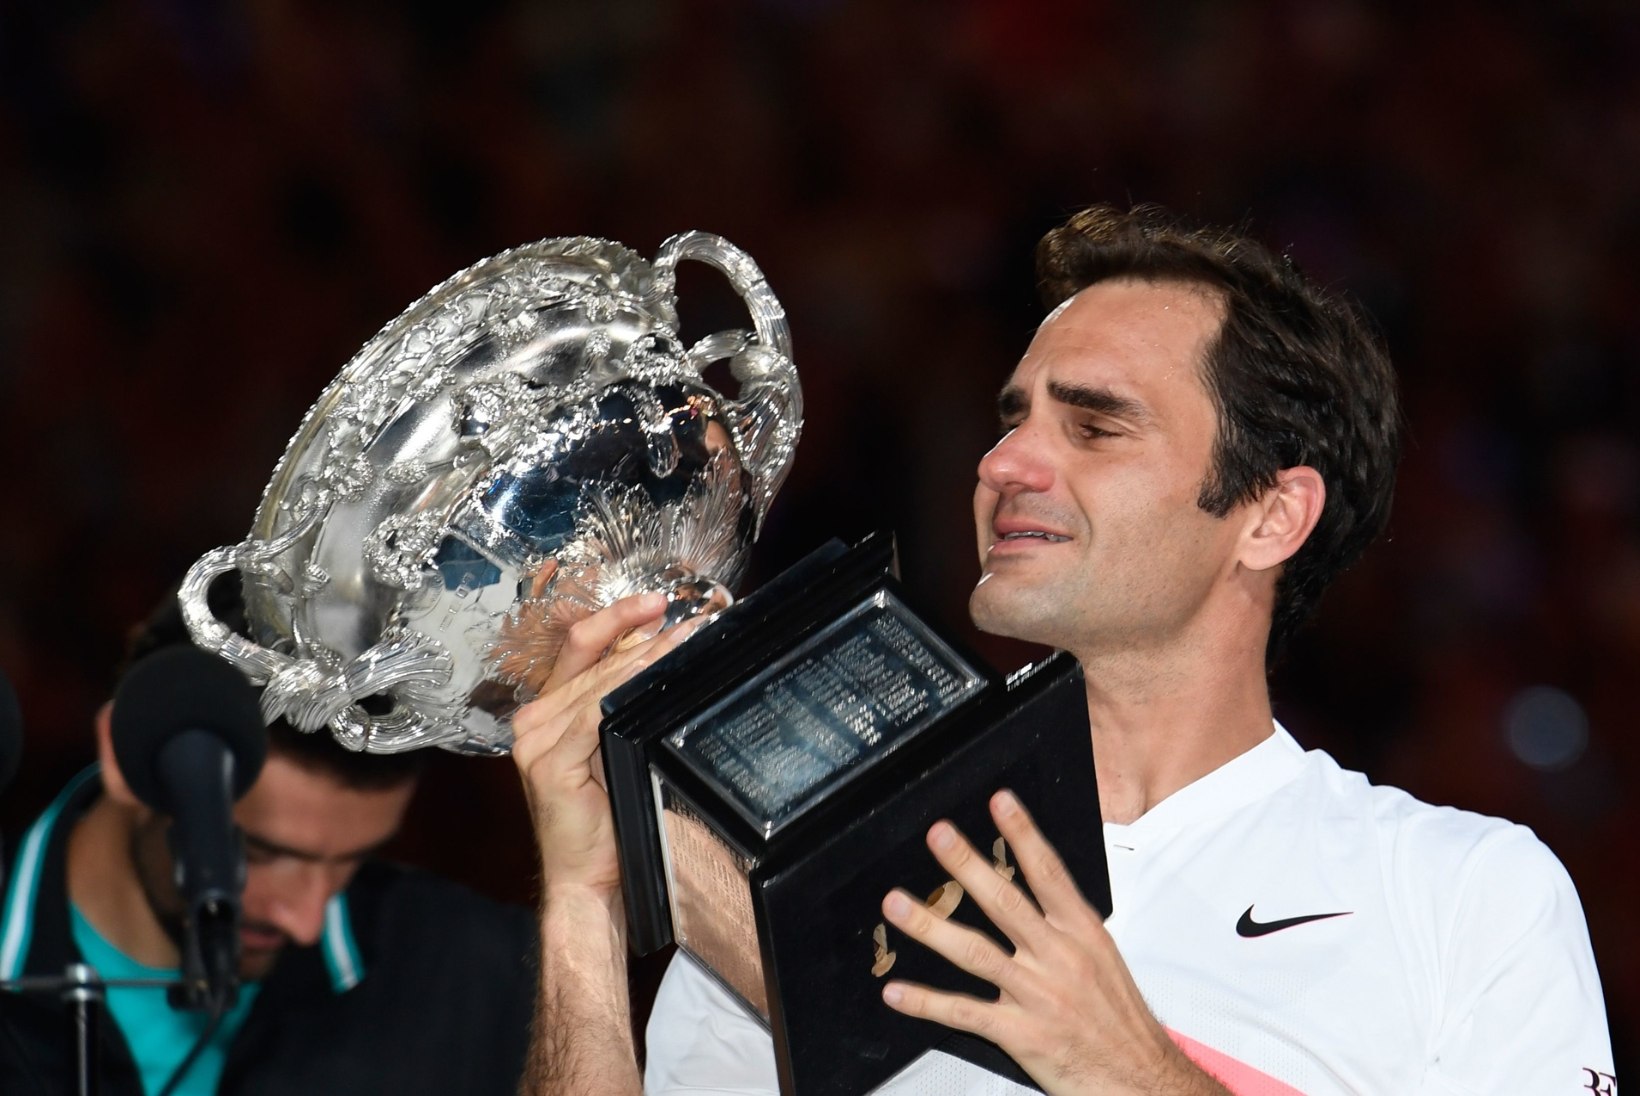 Roger Federer - läbi aegade parim (mees)tennisist! 